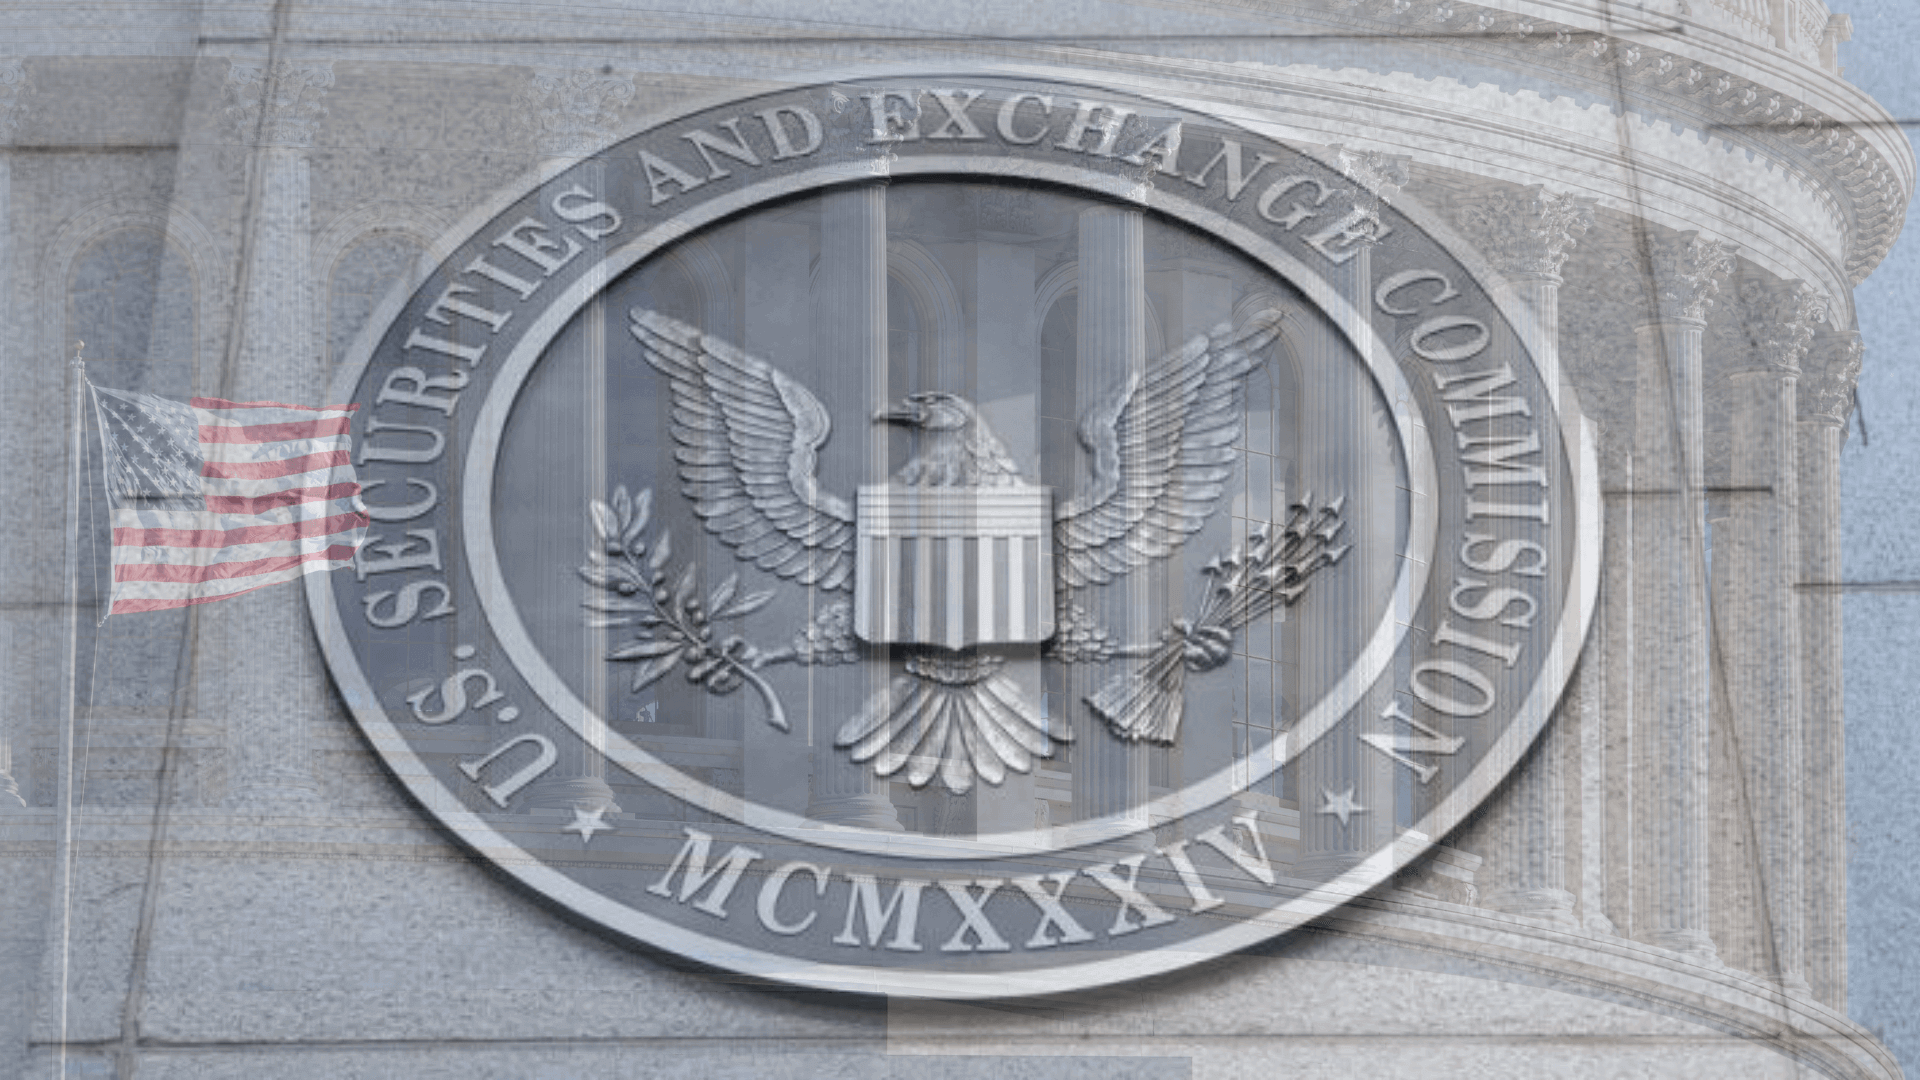 SteelEye - Key highlights from the SEC Binance complaint